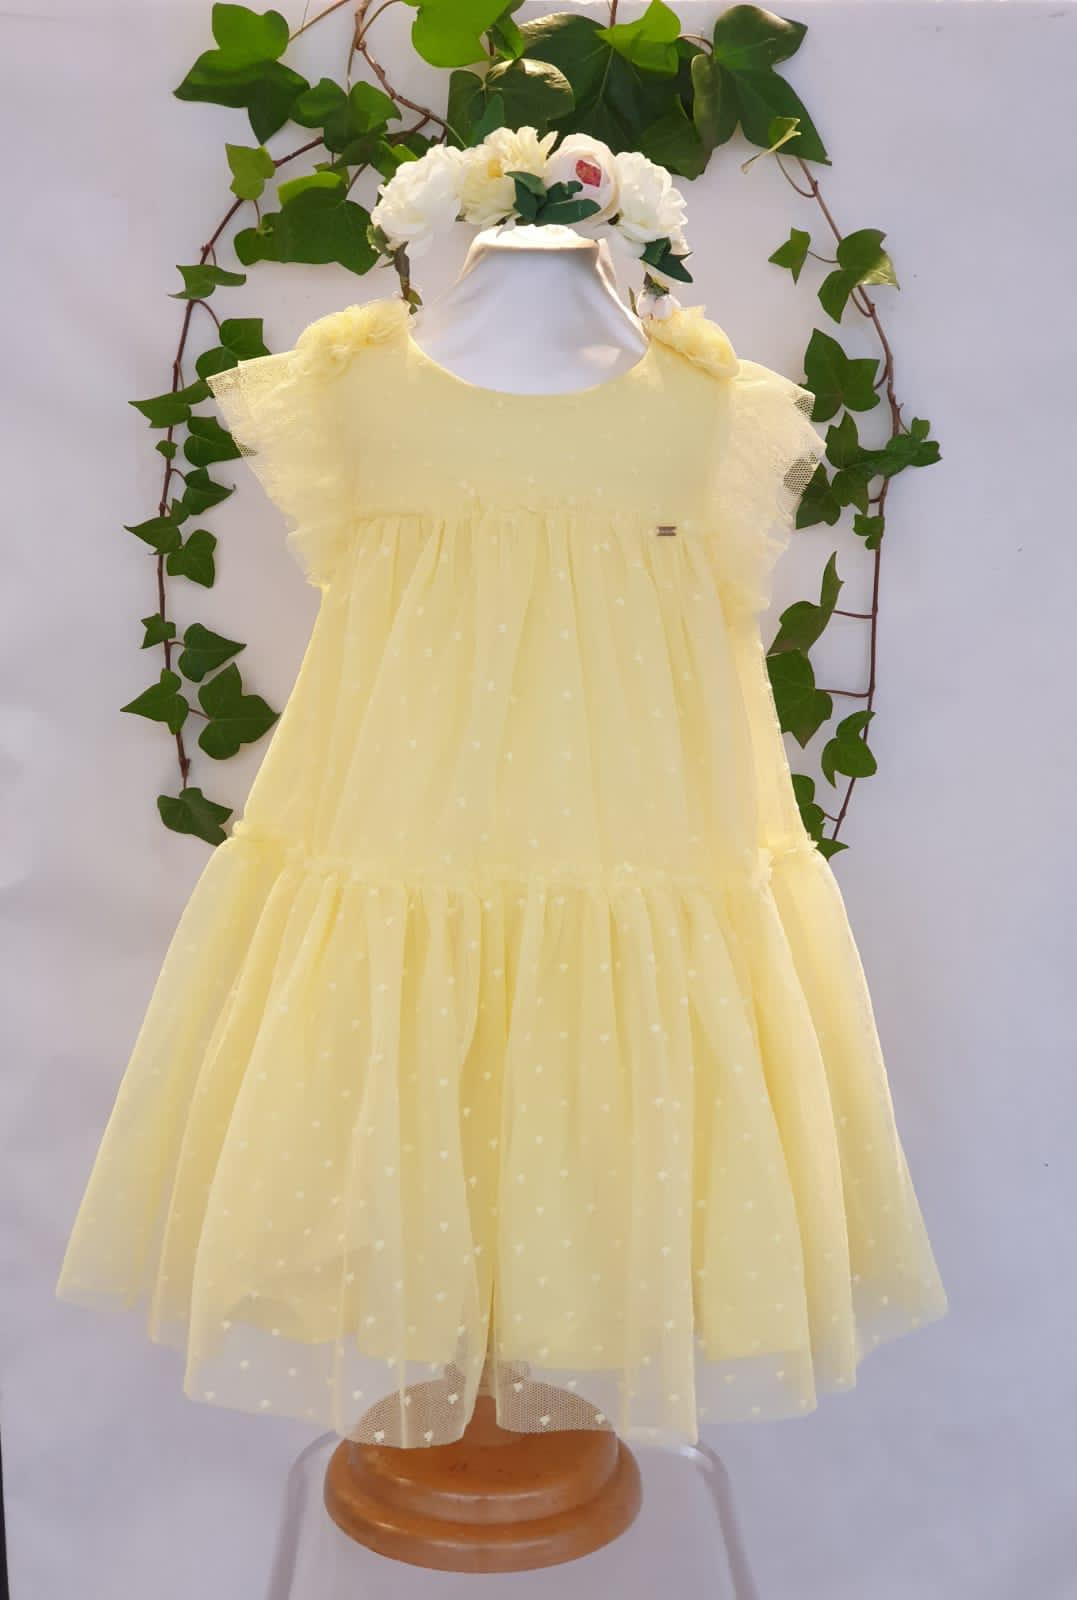 Fille robe tulle jaune mayoral du 2 ans au 9 ans 45 euros